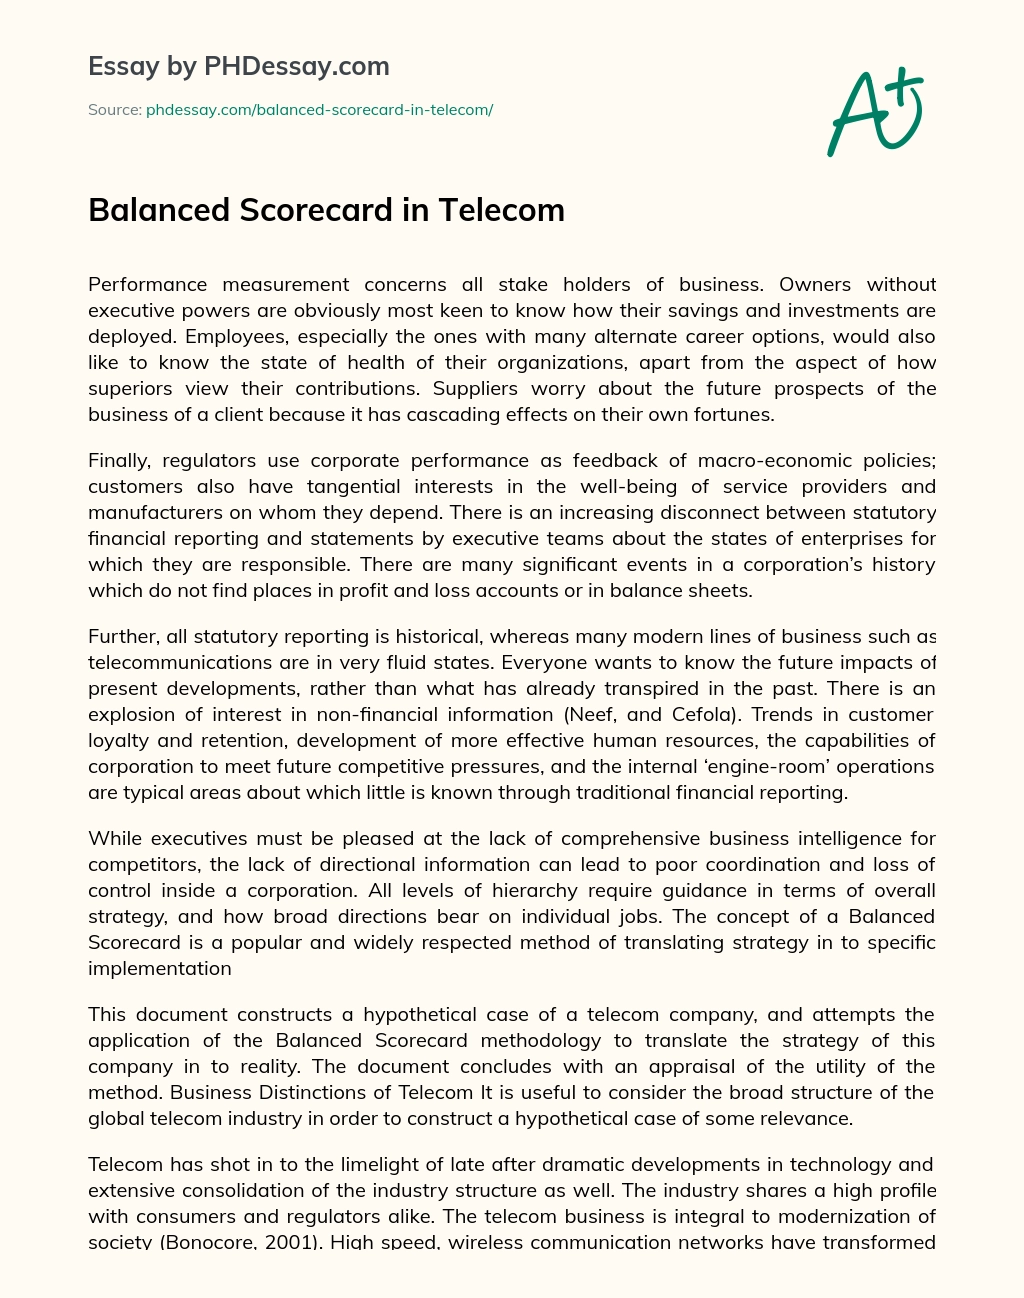 Balanced Scorecard in Telecom essay